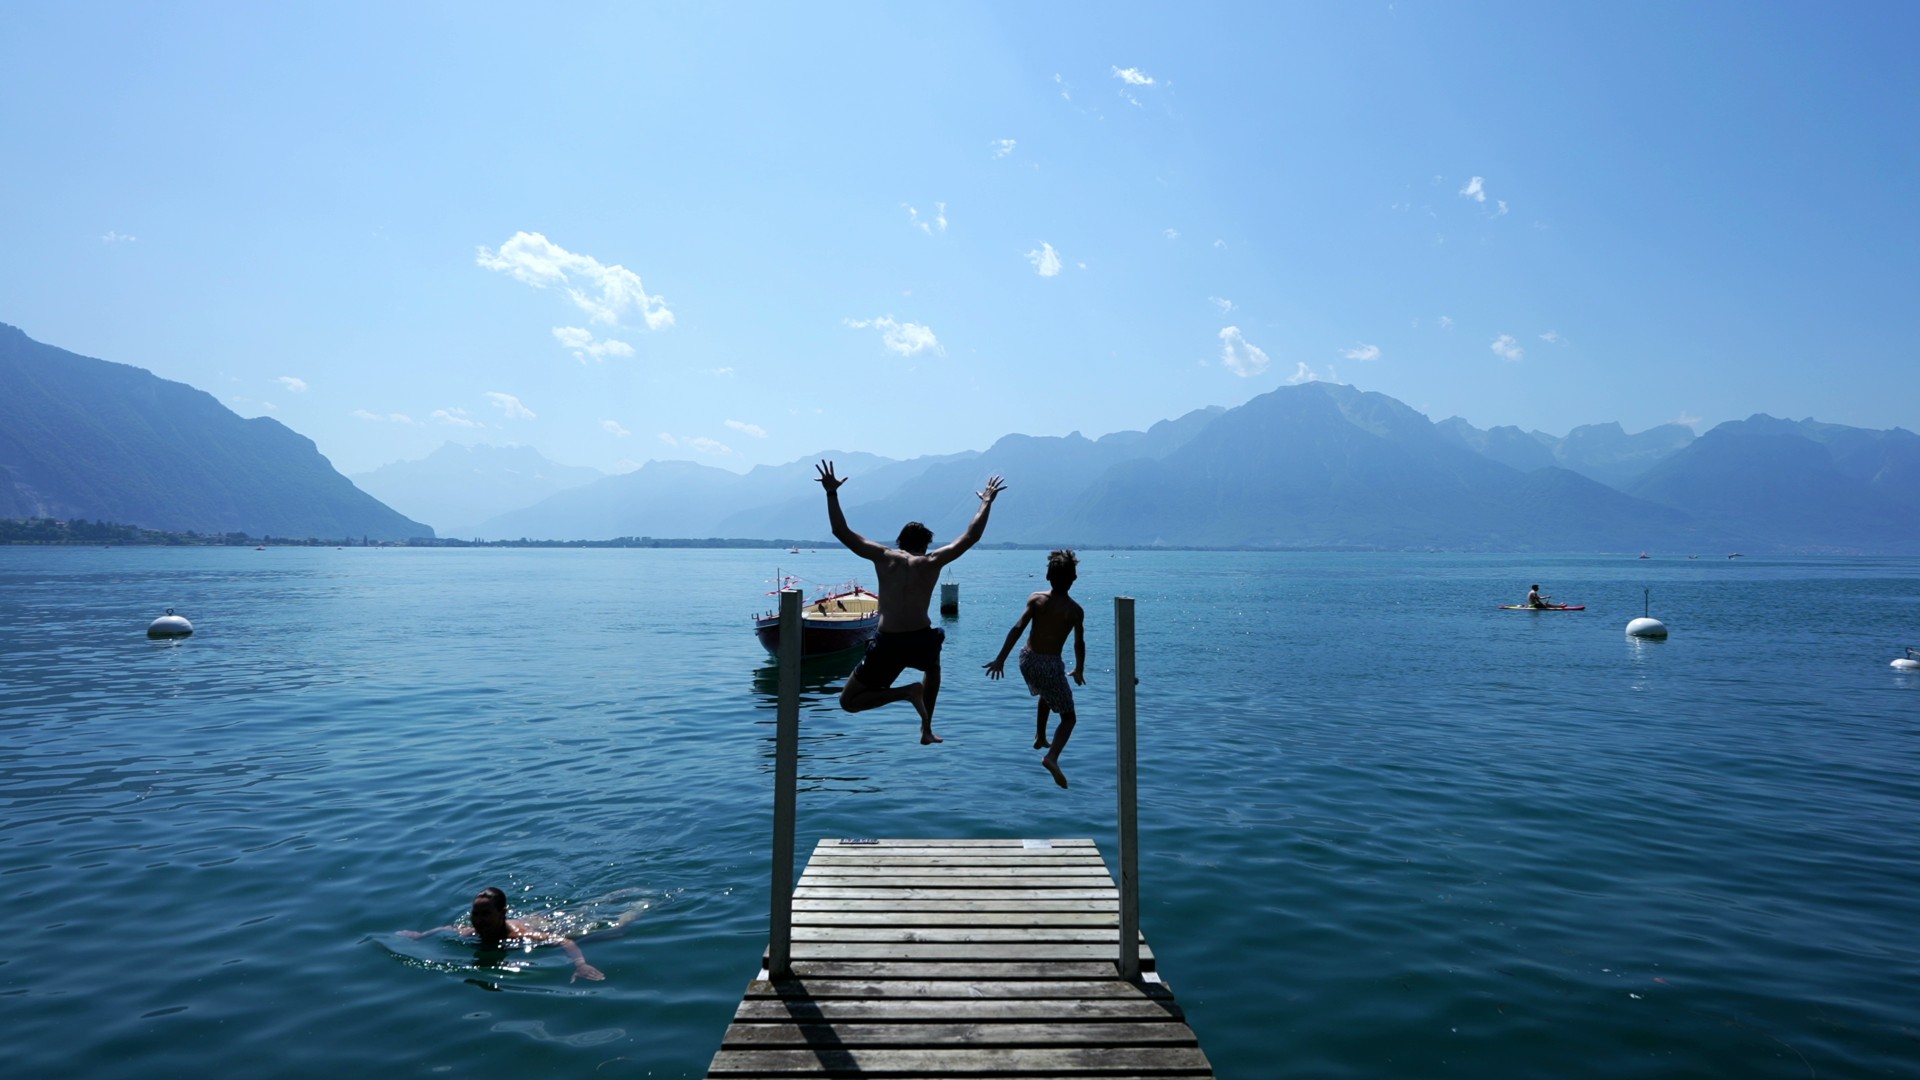 People jumping into a Swiss lake